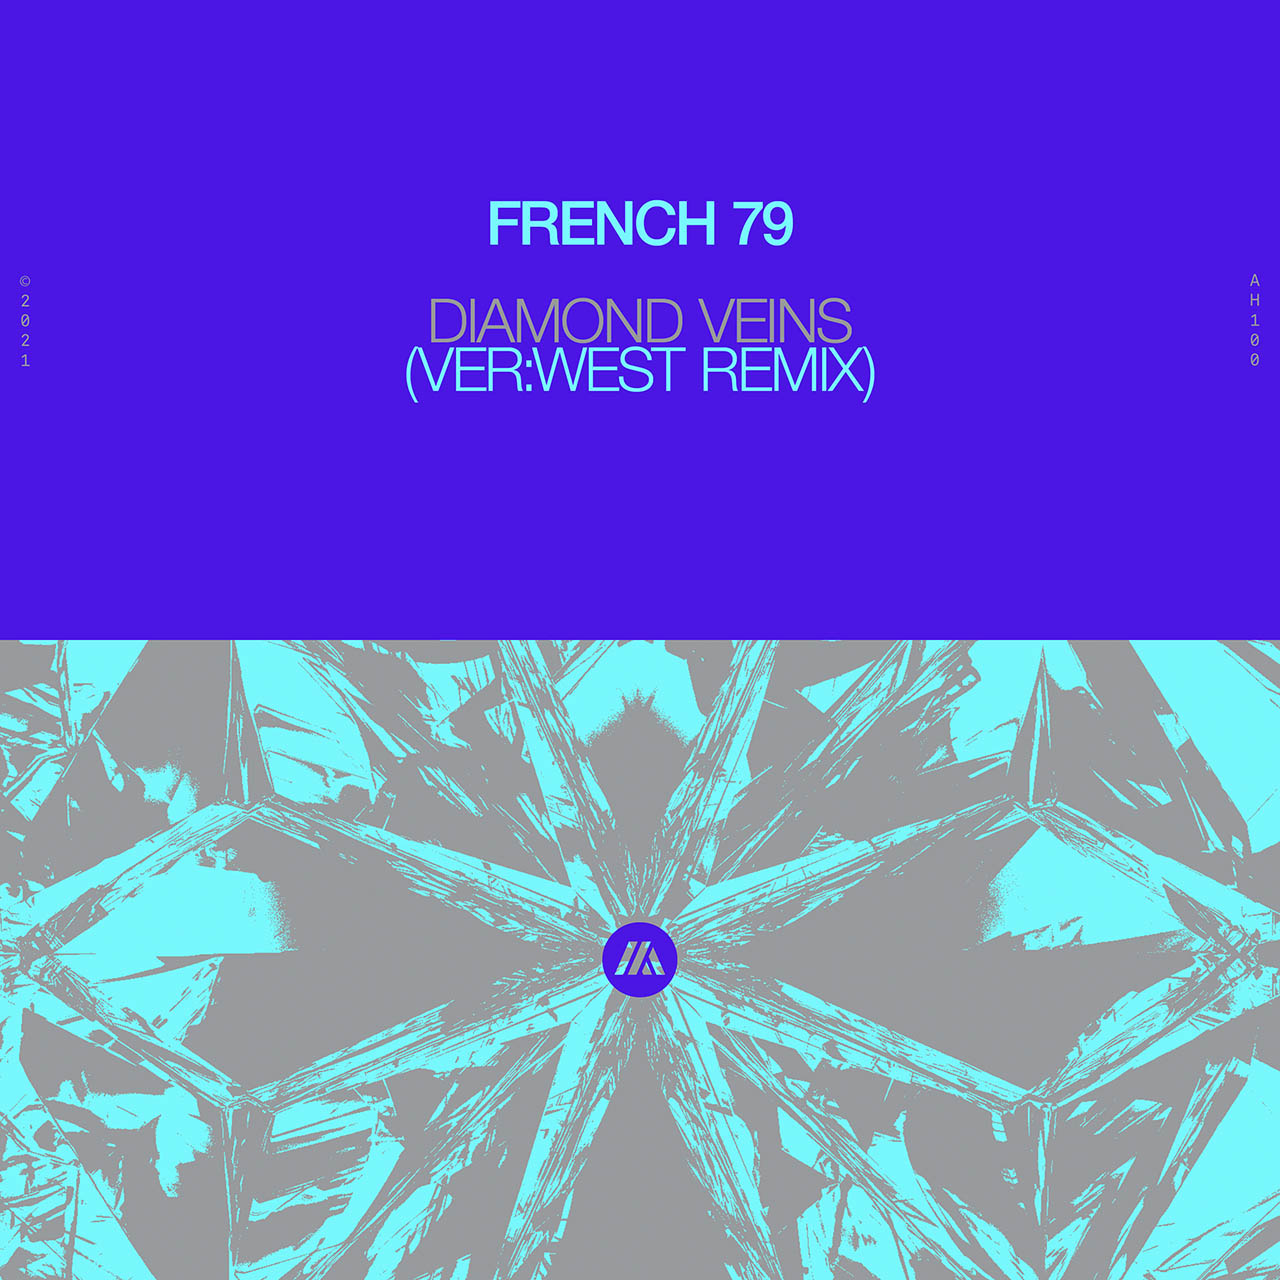 French 79 - Diamond Veins (VER-WEST Remix)